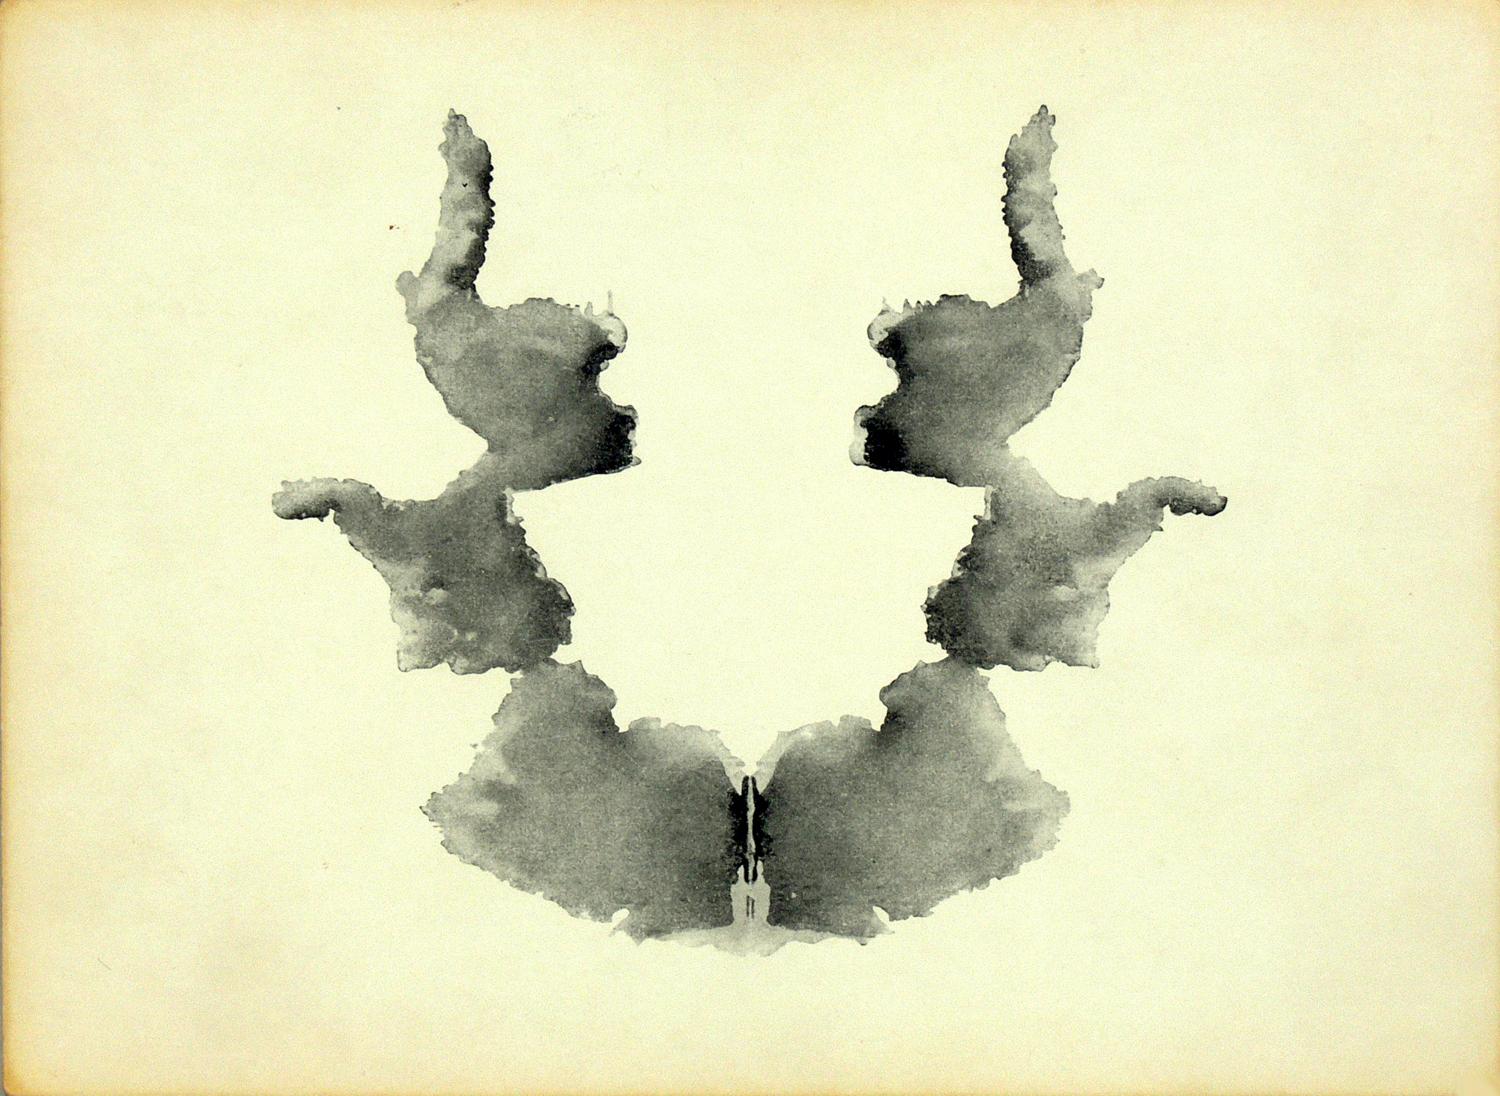 Wood Group of Original Abstract Rorschach Inkblot Test Prints